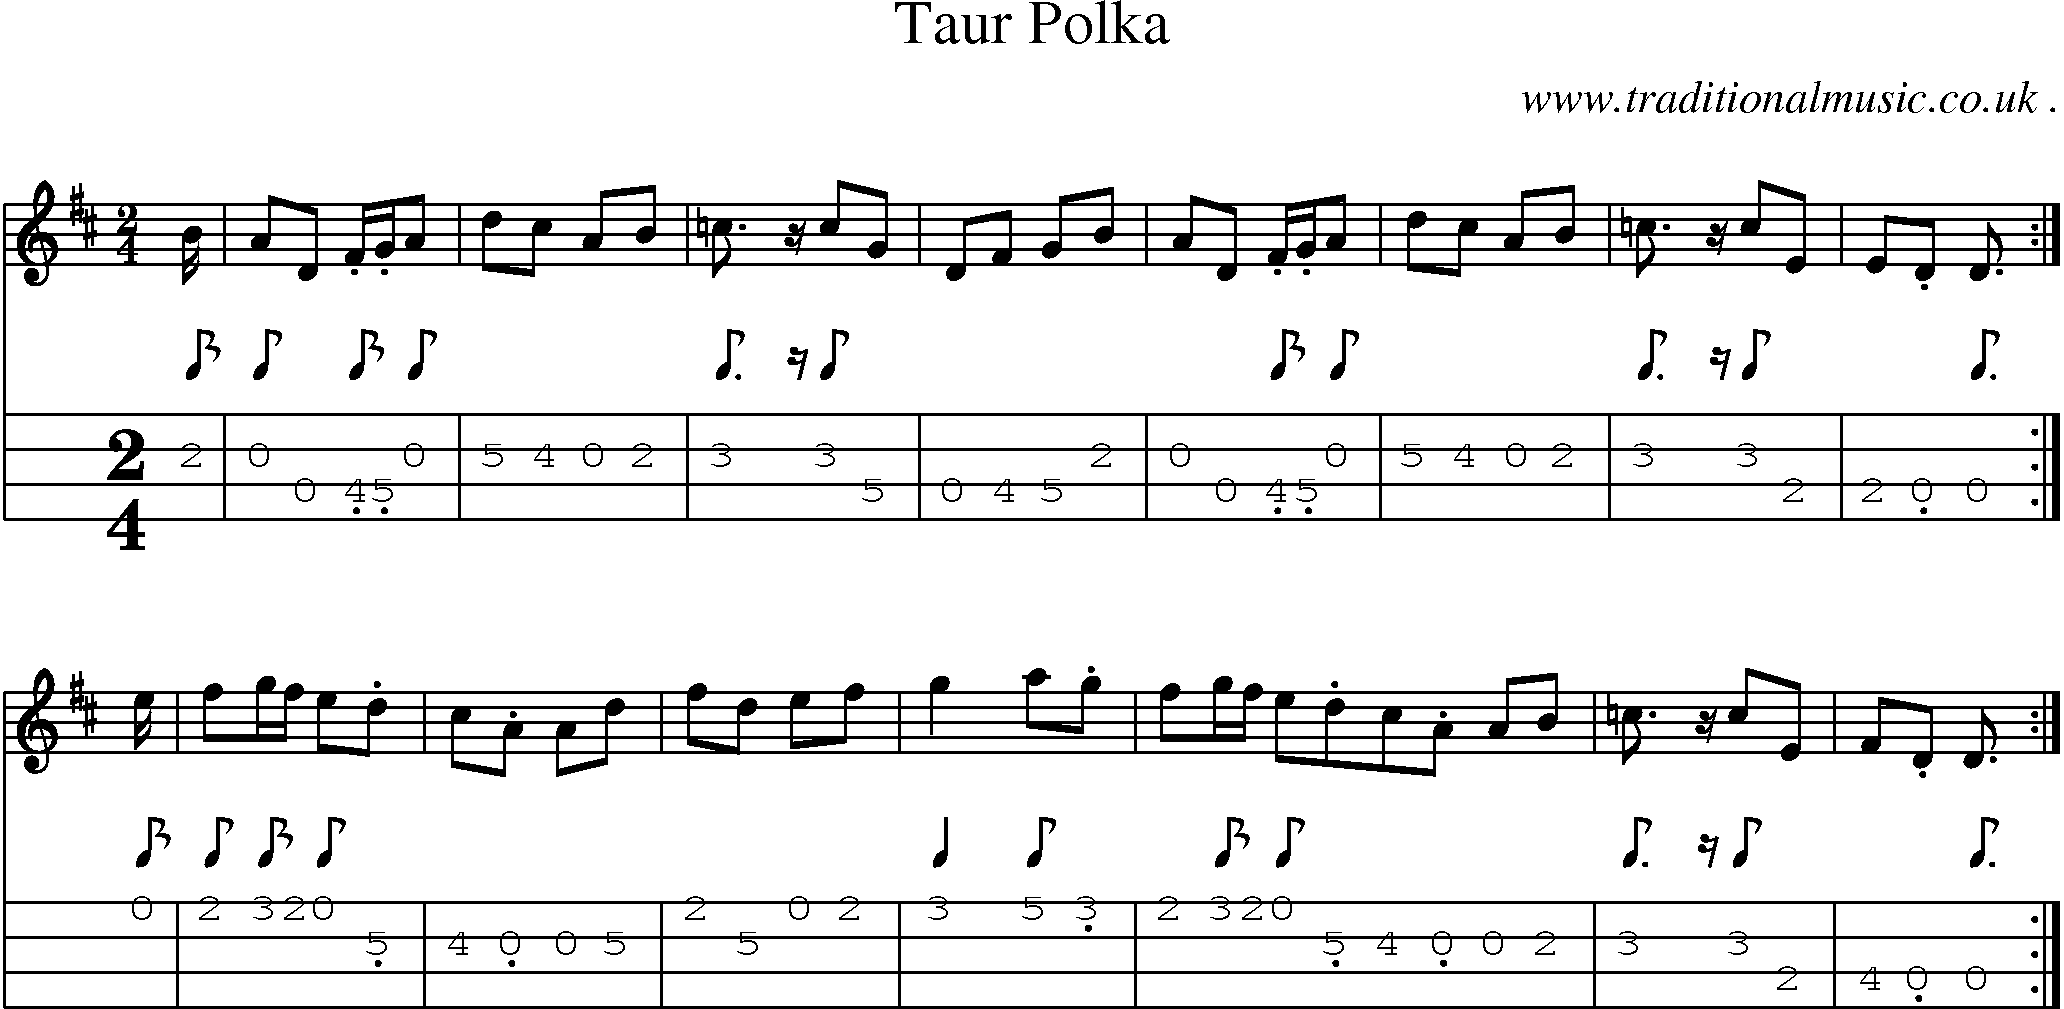 Sheet-Music and Mandolin Tabs for Taur Polka